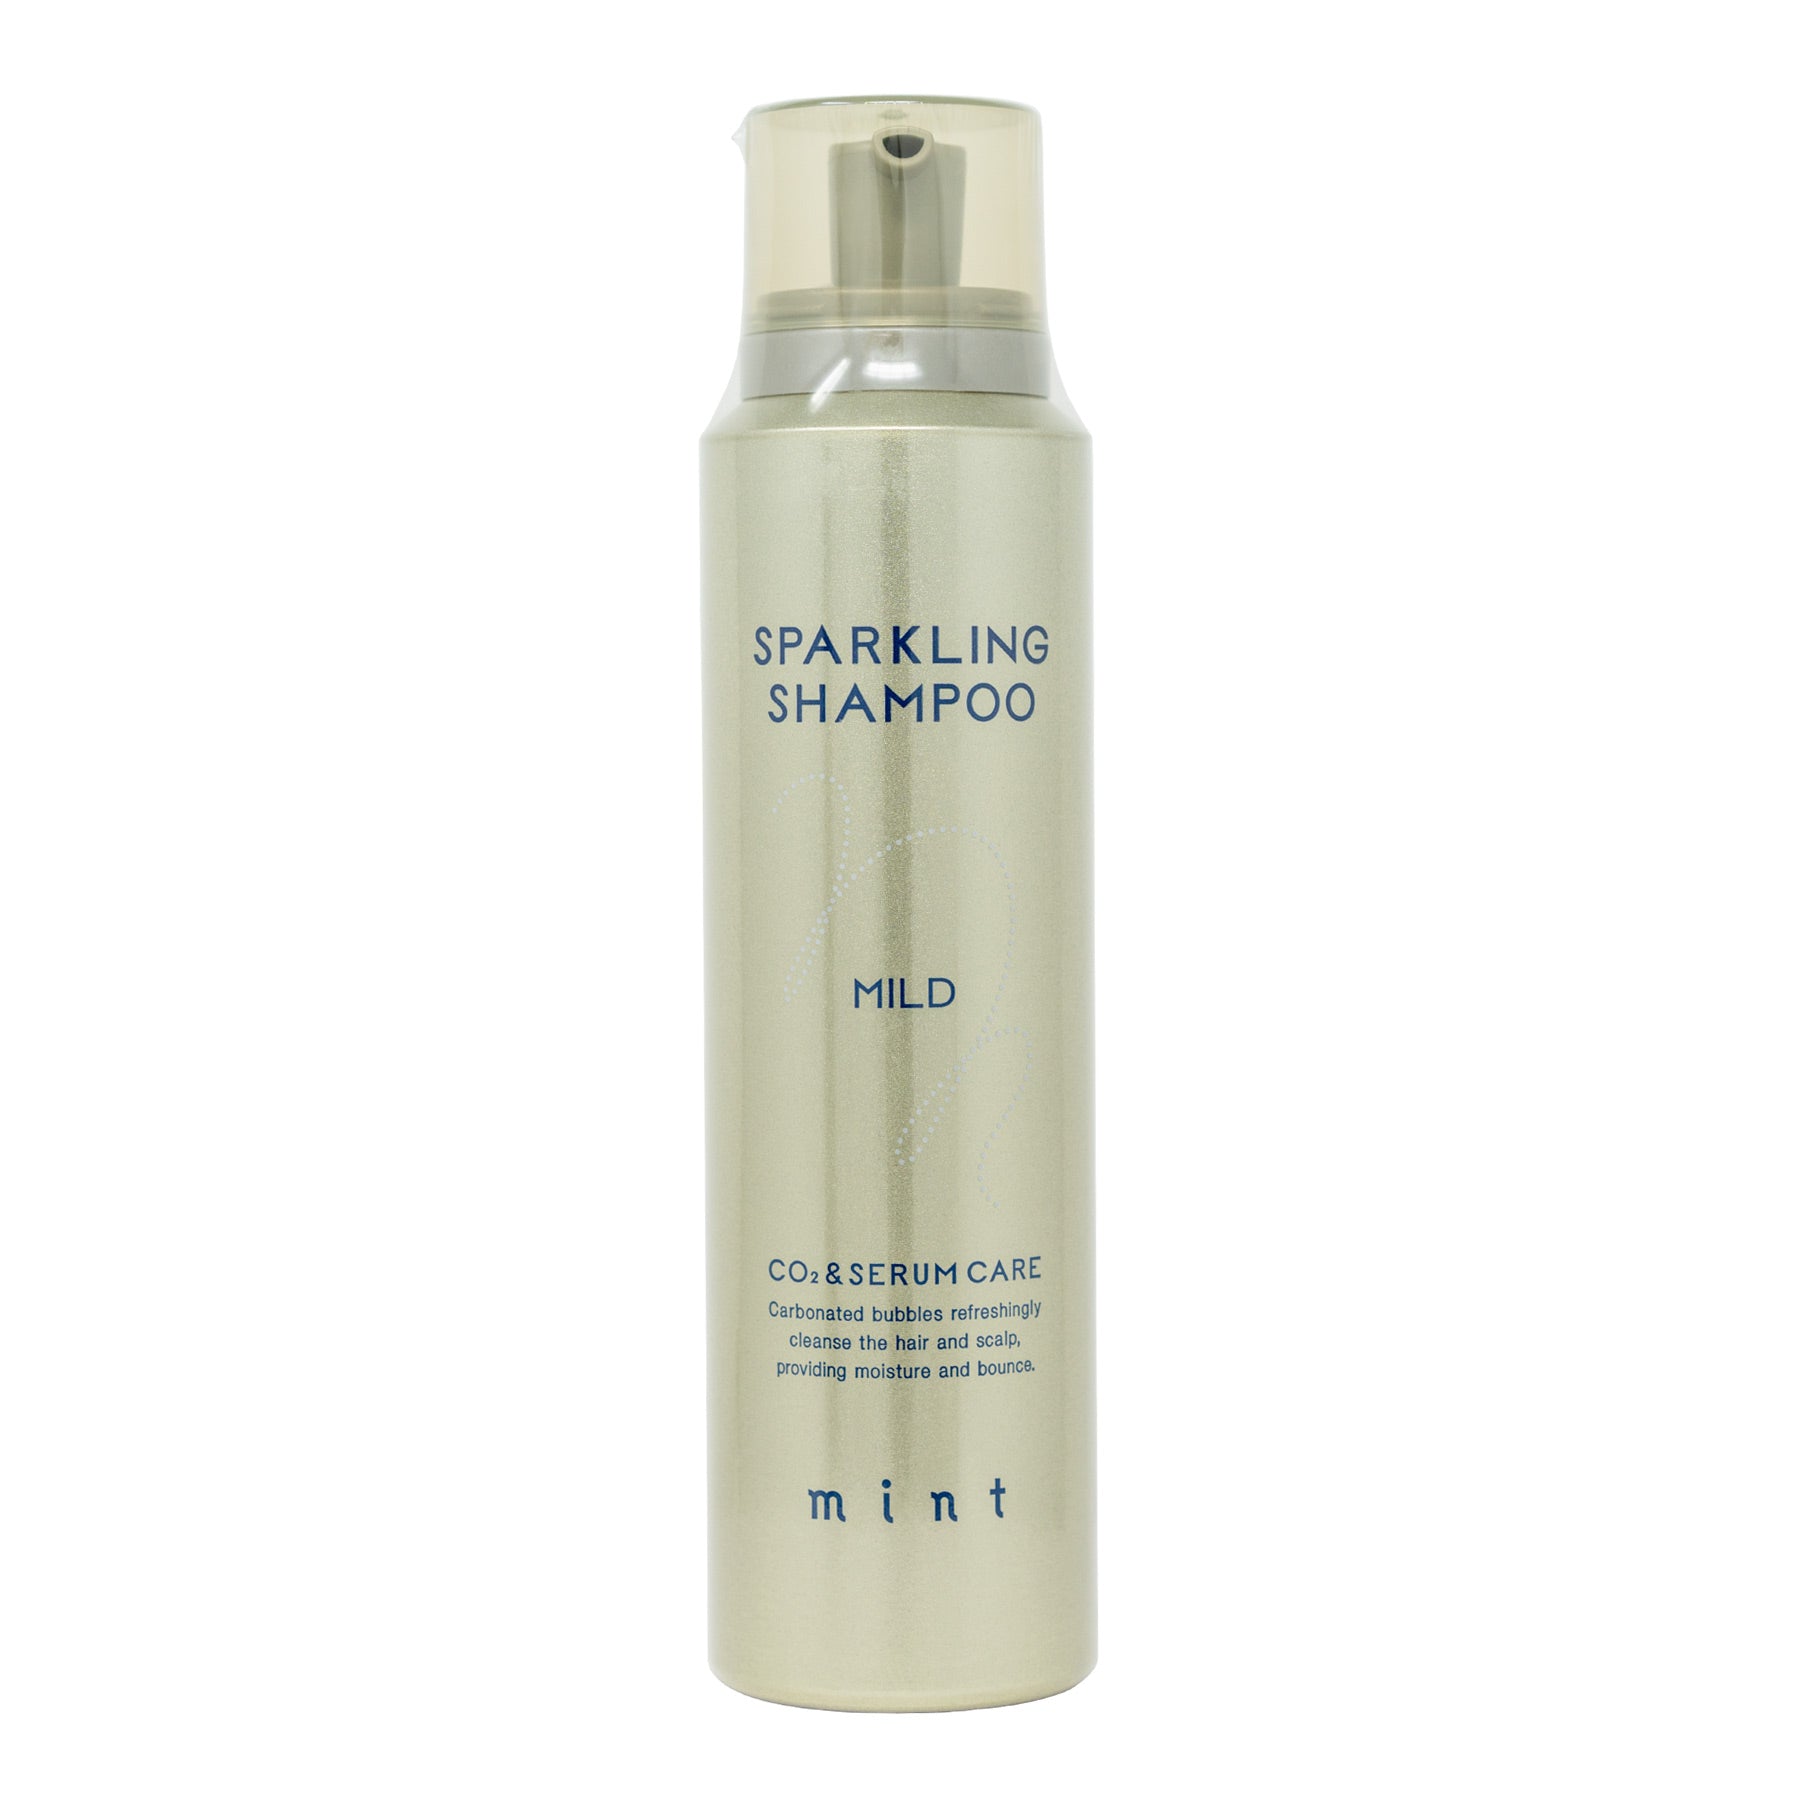 Arimino Mint Sparkling Shampoo Mild